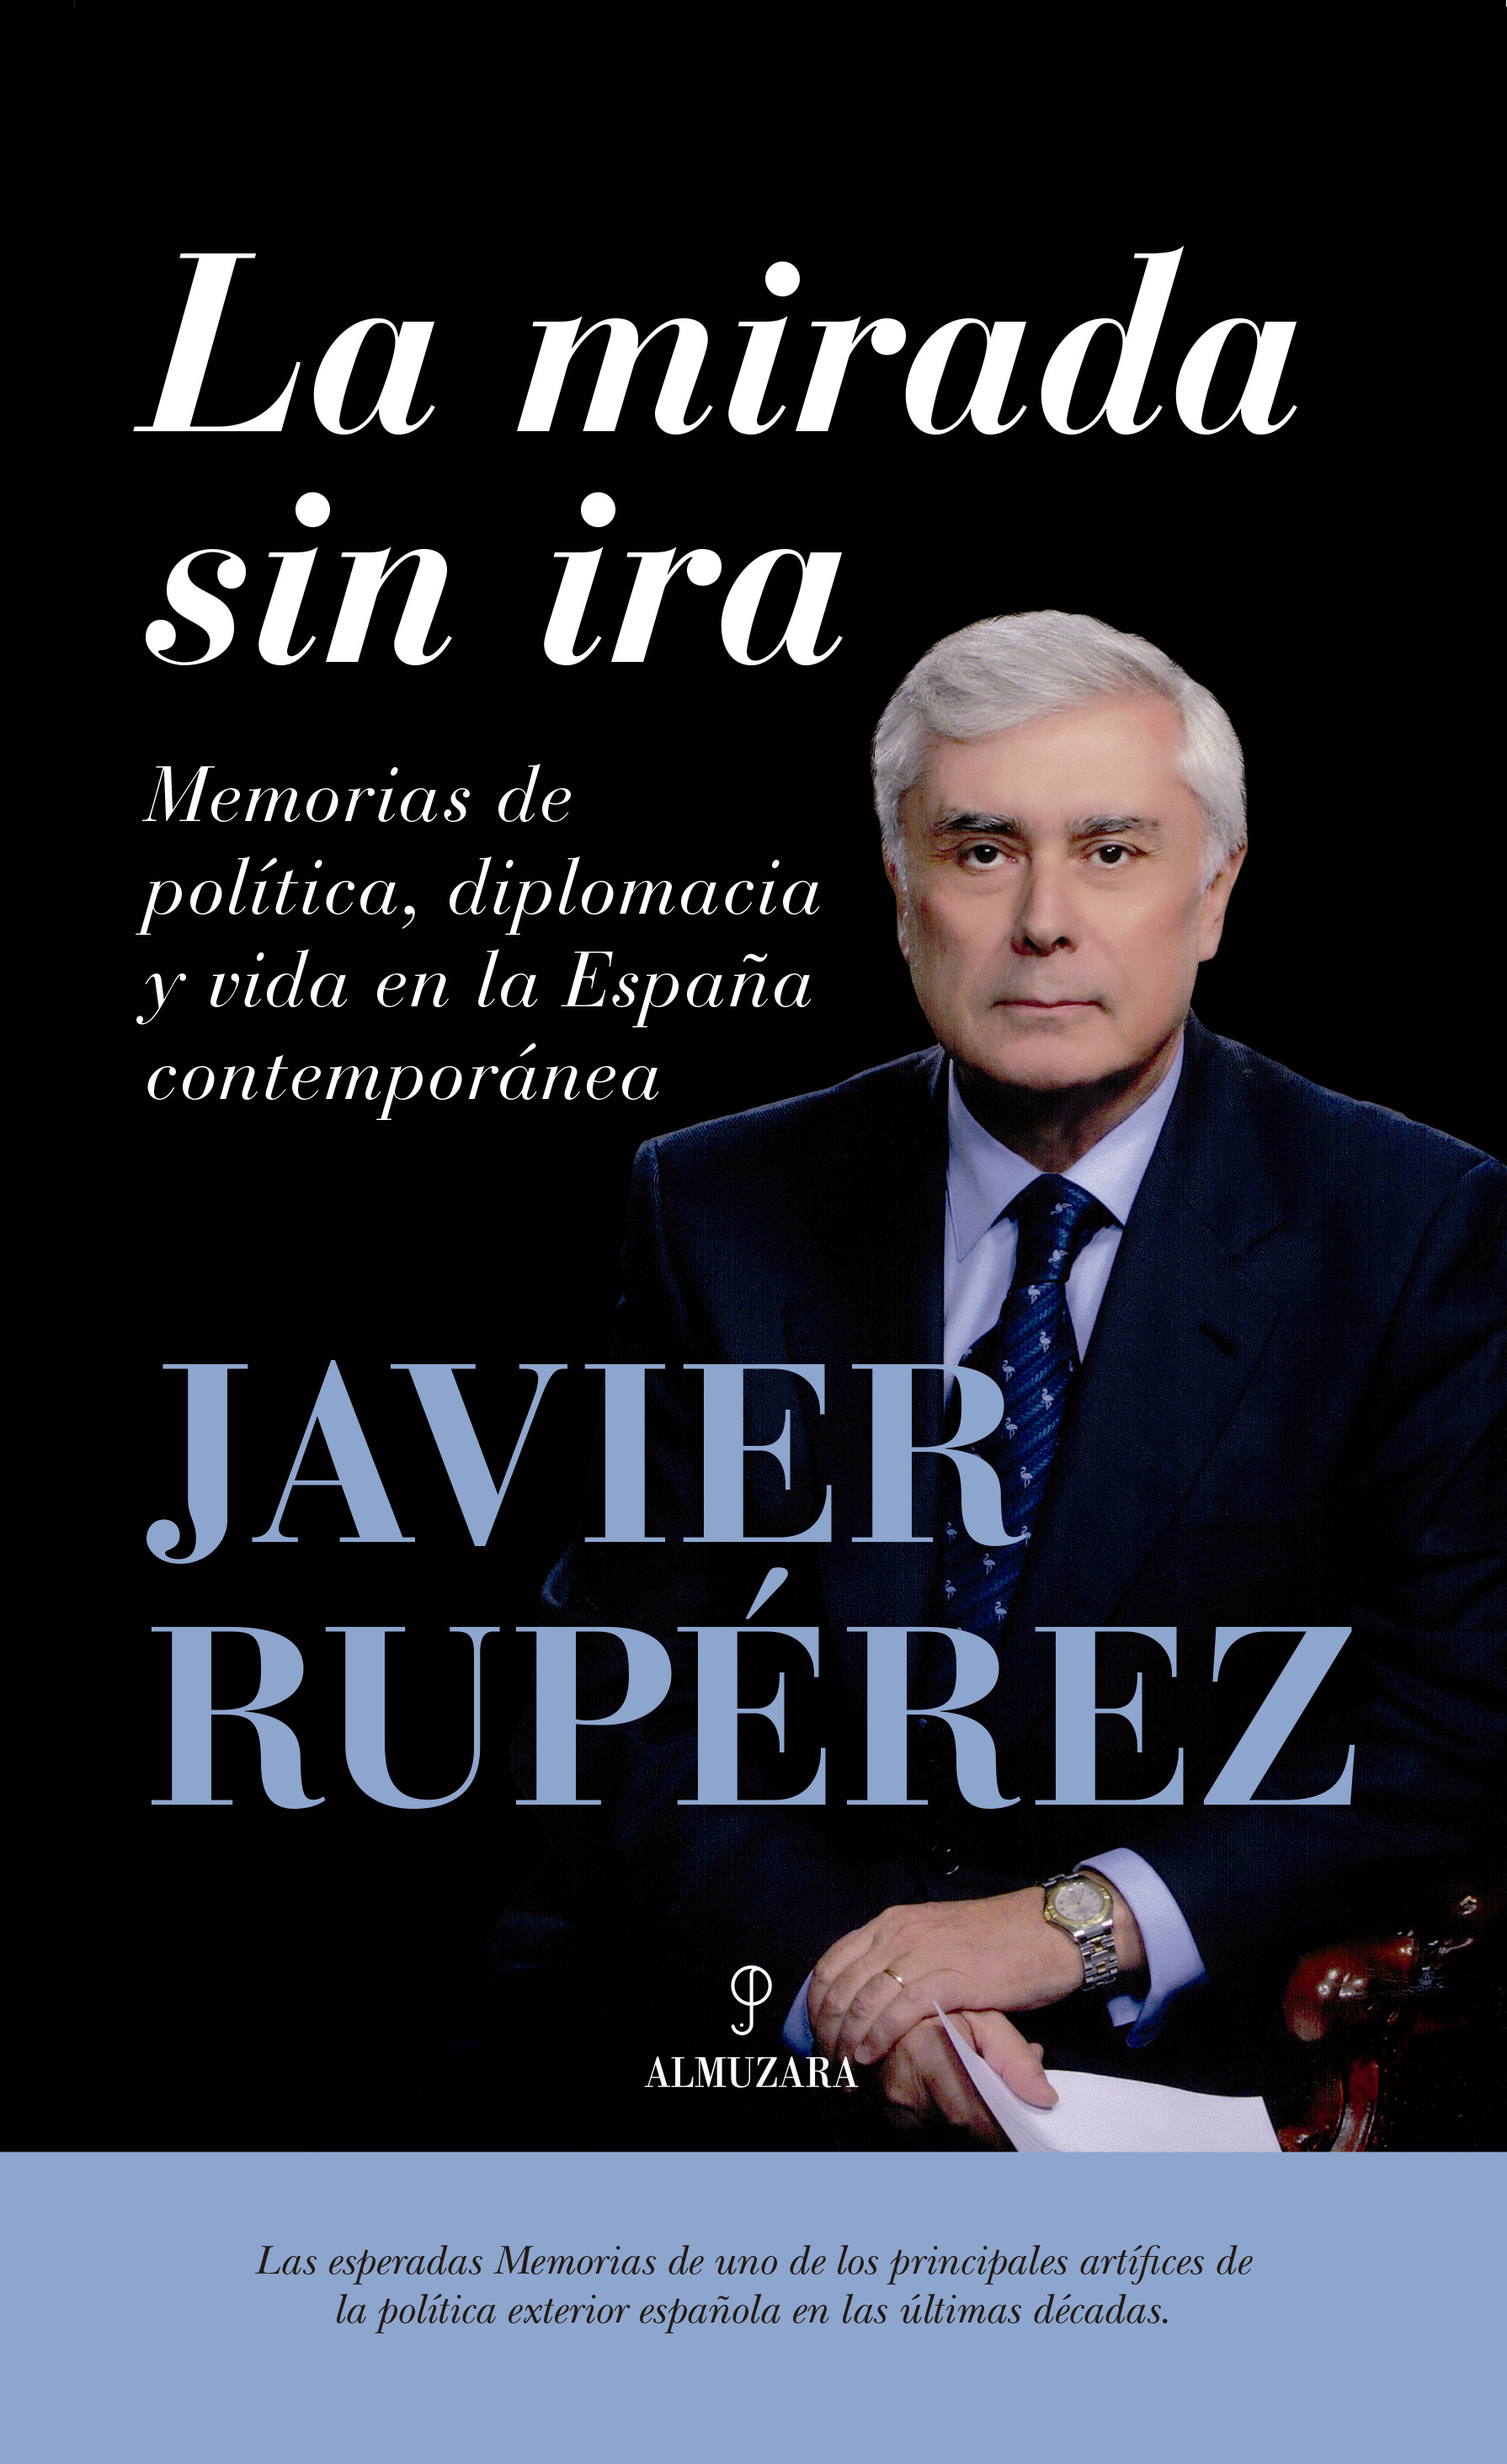 Javier Rupérez